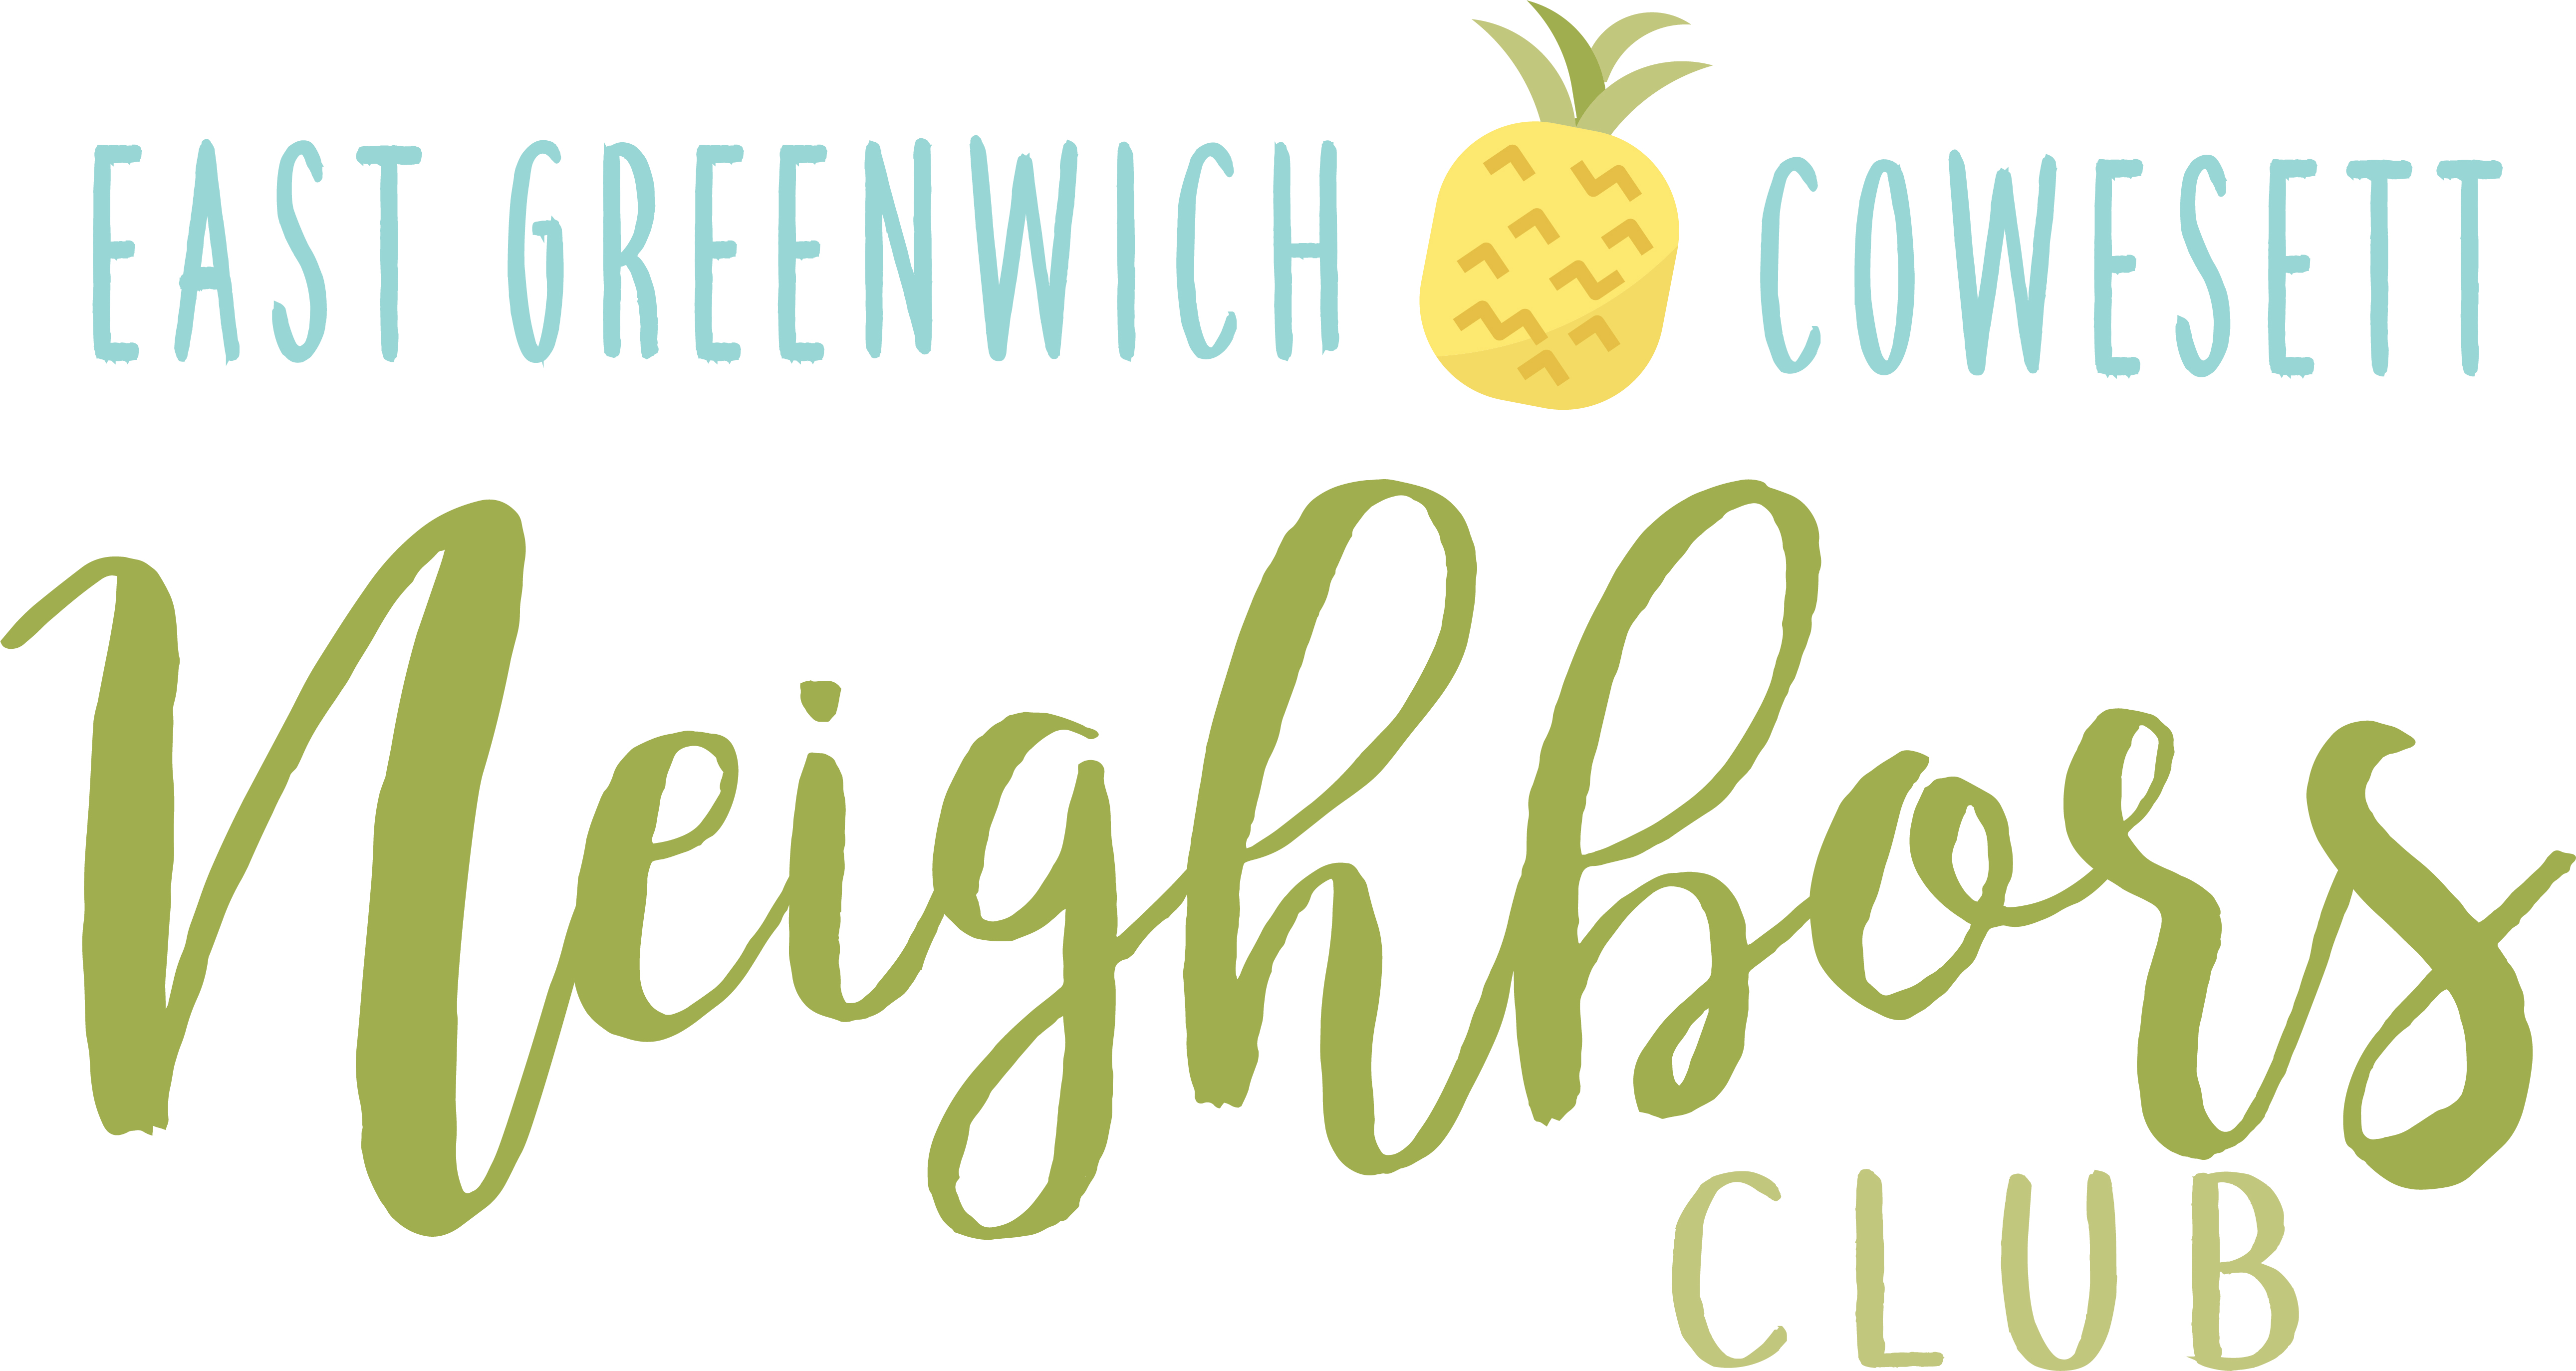 Logo for East Greenwich-Cowesett Neighbors Club